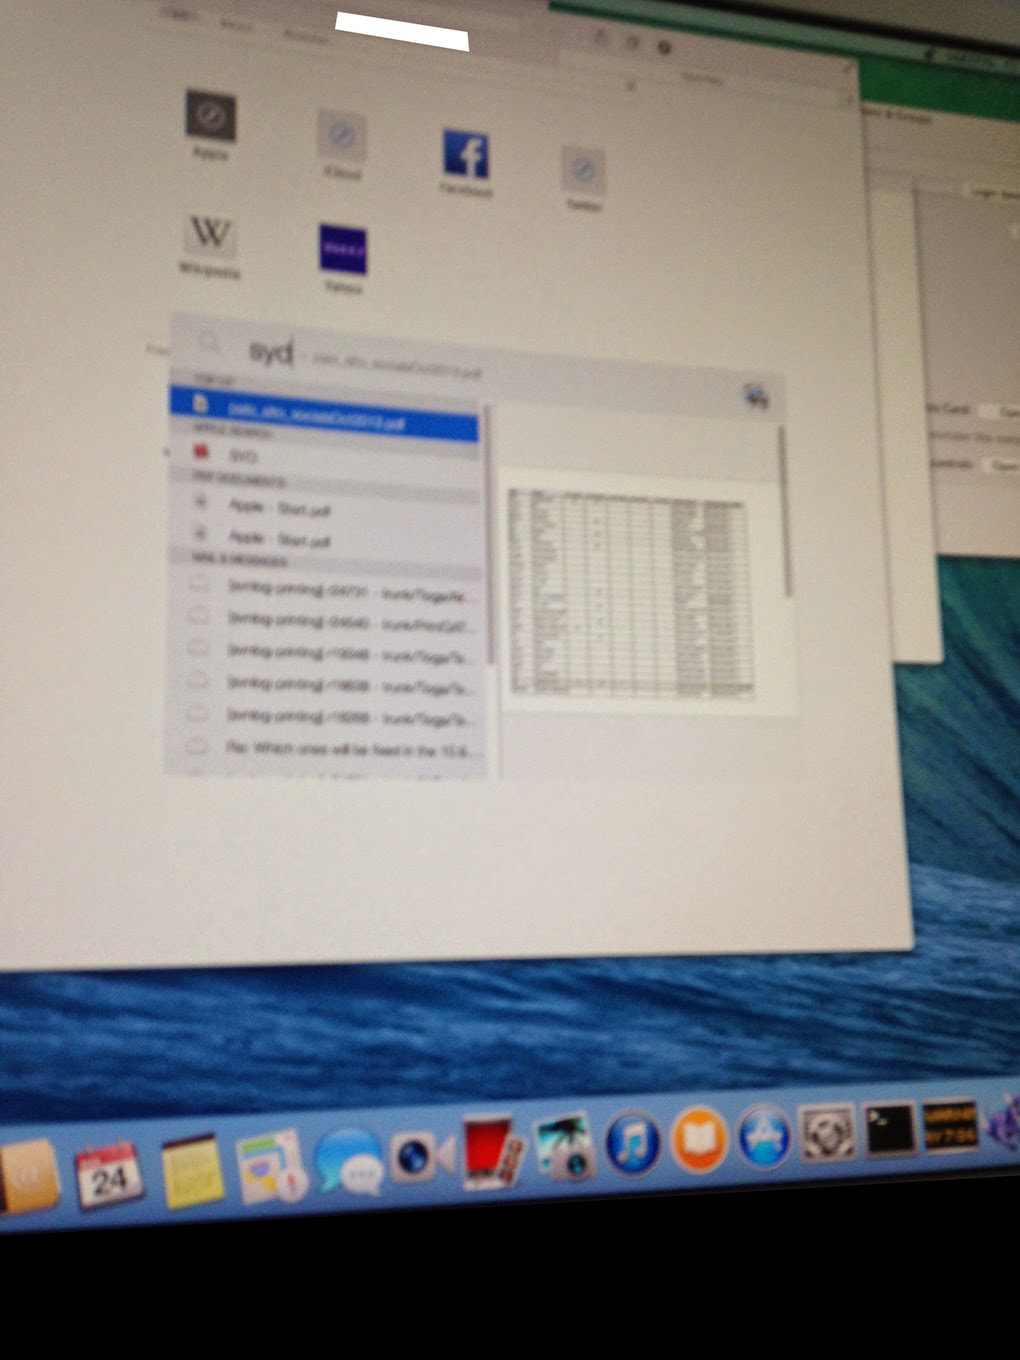 Mac OS X 10.10 Leak Image